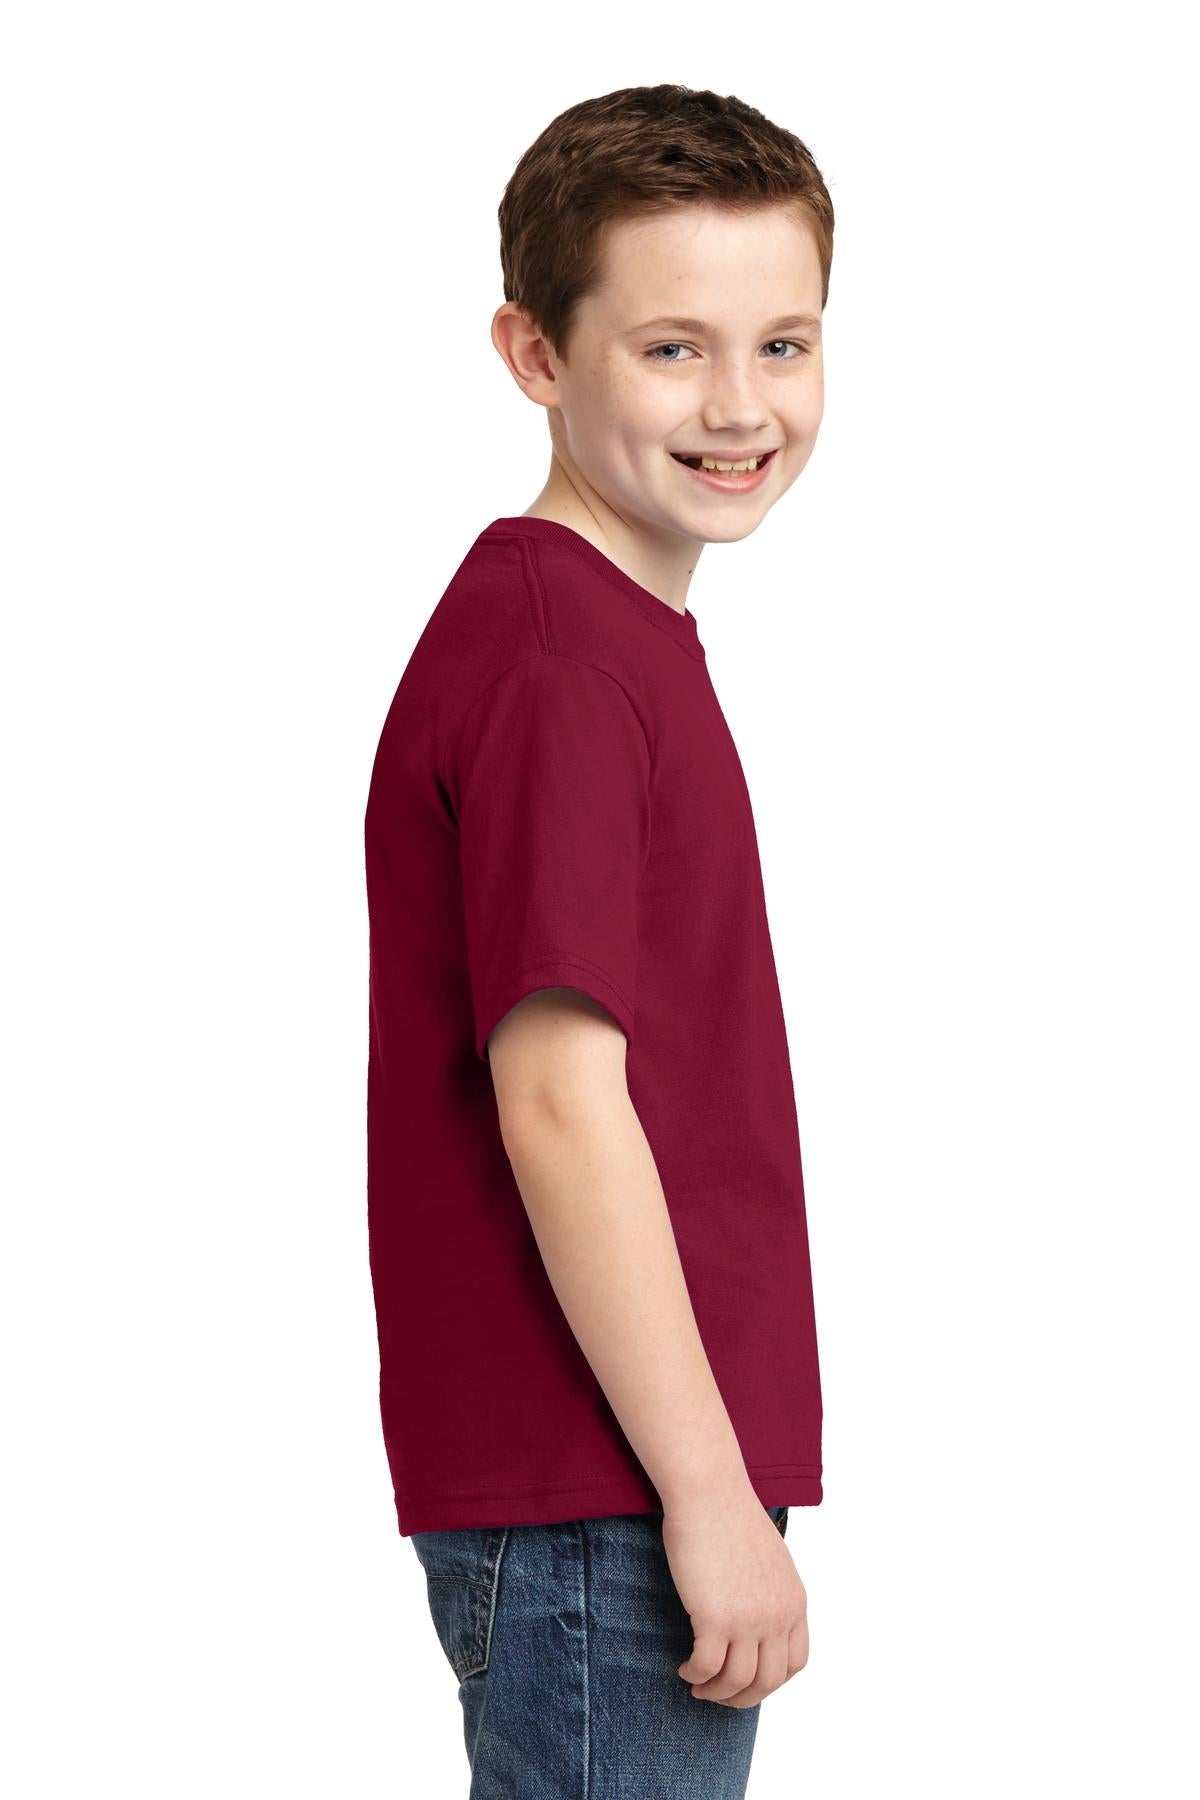 JERZEES® - Youth Dri-Power® 50/50 Cotton/Poly T-Shirt. 29B [Cardinal] - DFW Impression